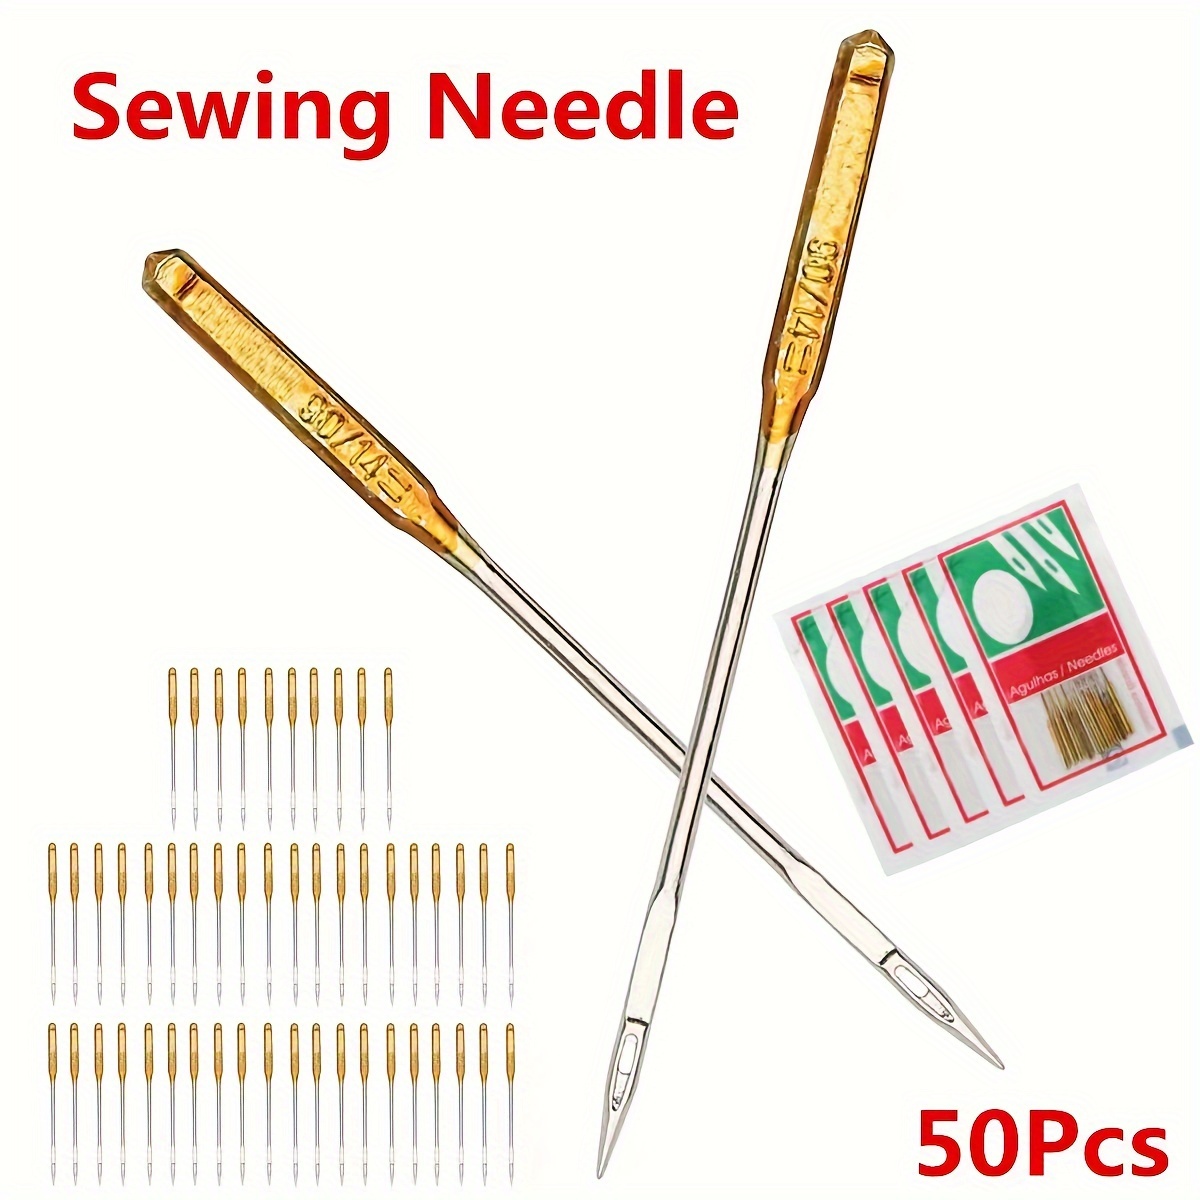 

50pcs Mix Size Household Domestic Sewing Machine Needles Hax1 65/9, 75/11, 90/14, 100/16, 110/18